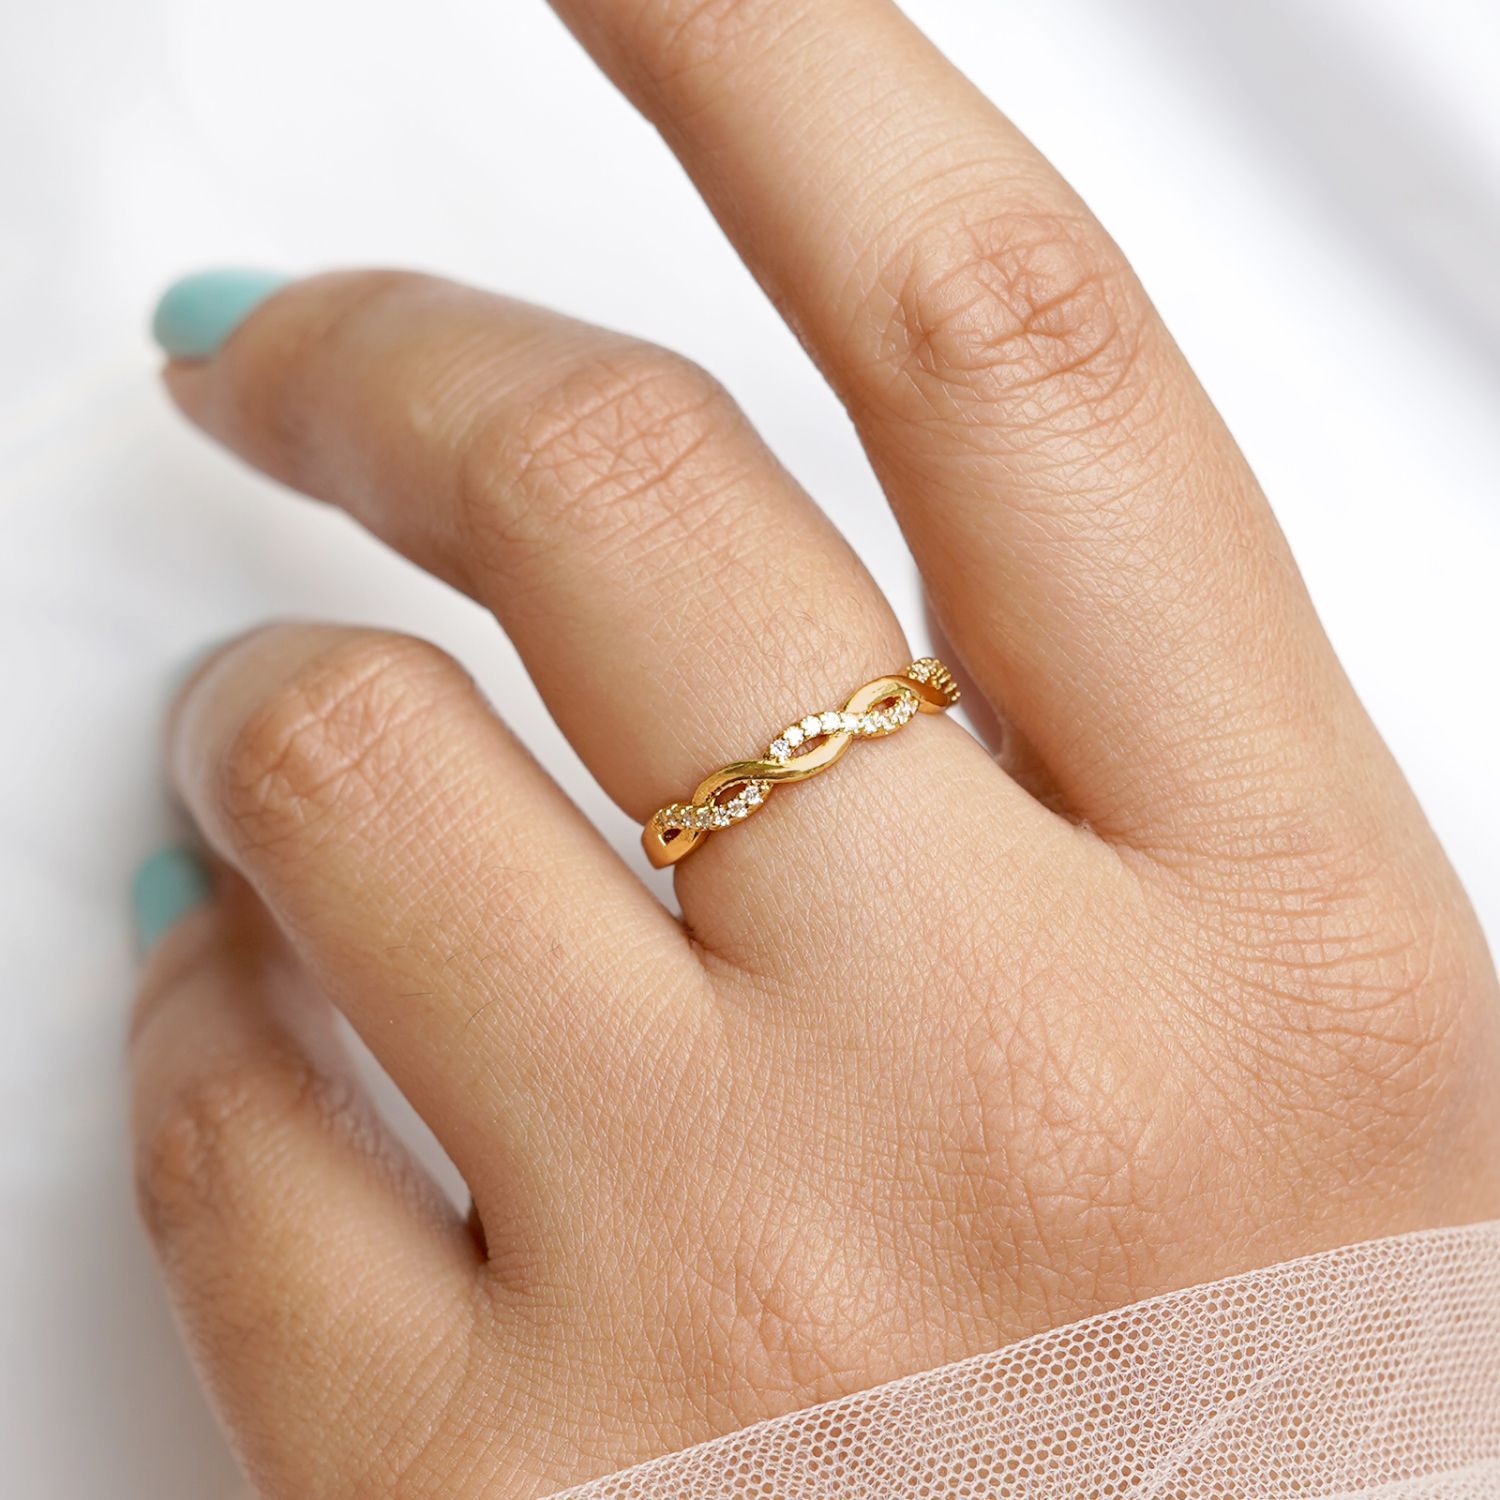 Gold rings jewelry | Gold finger rings | Gold rings aesthetic | Fashion  jewelry | #Gold #Ring #Women | Desain cincin emas, Desain cincin, Cincin  emas